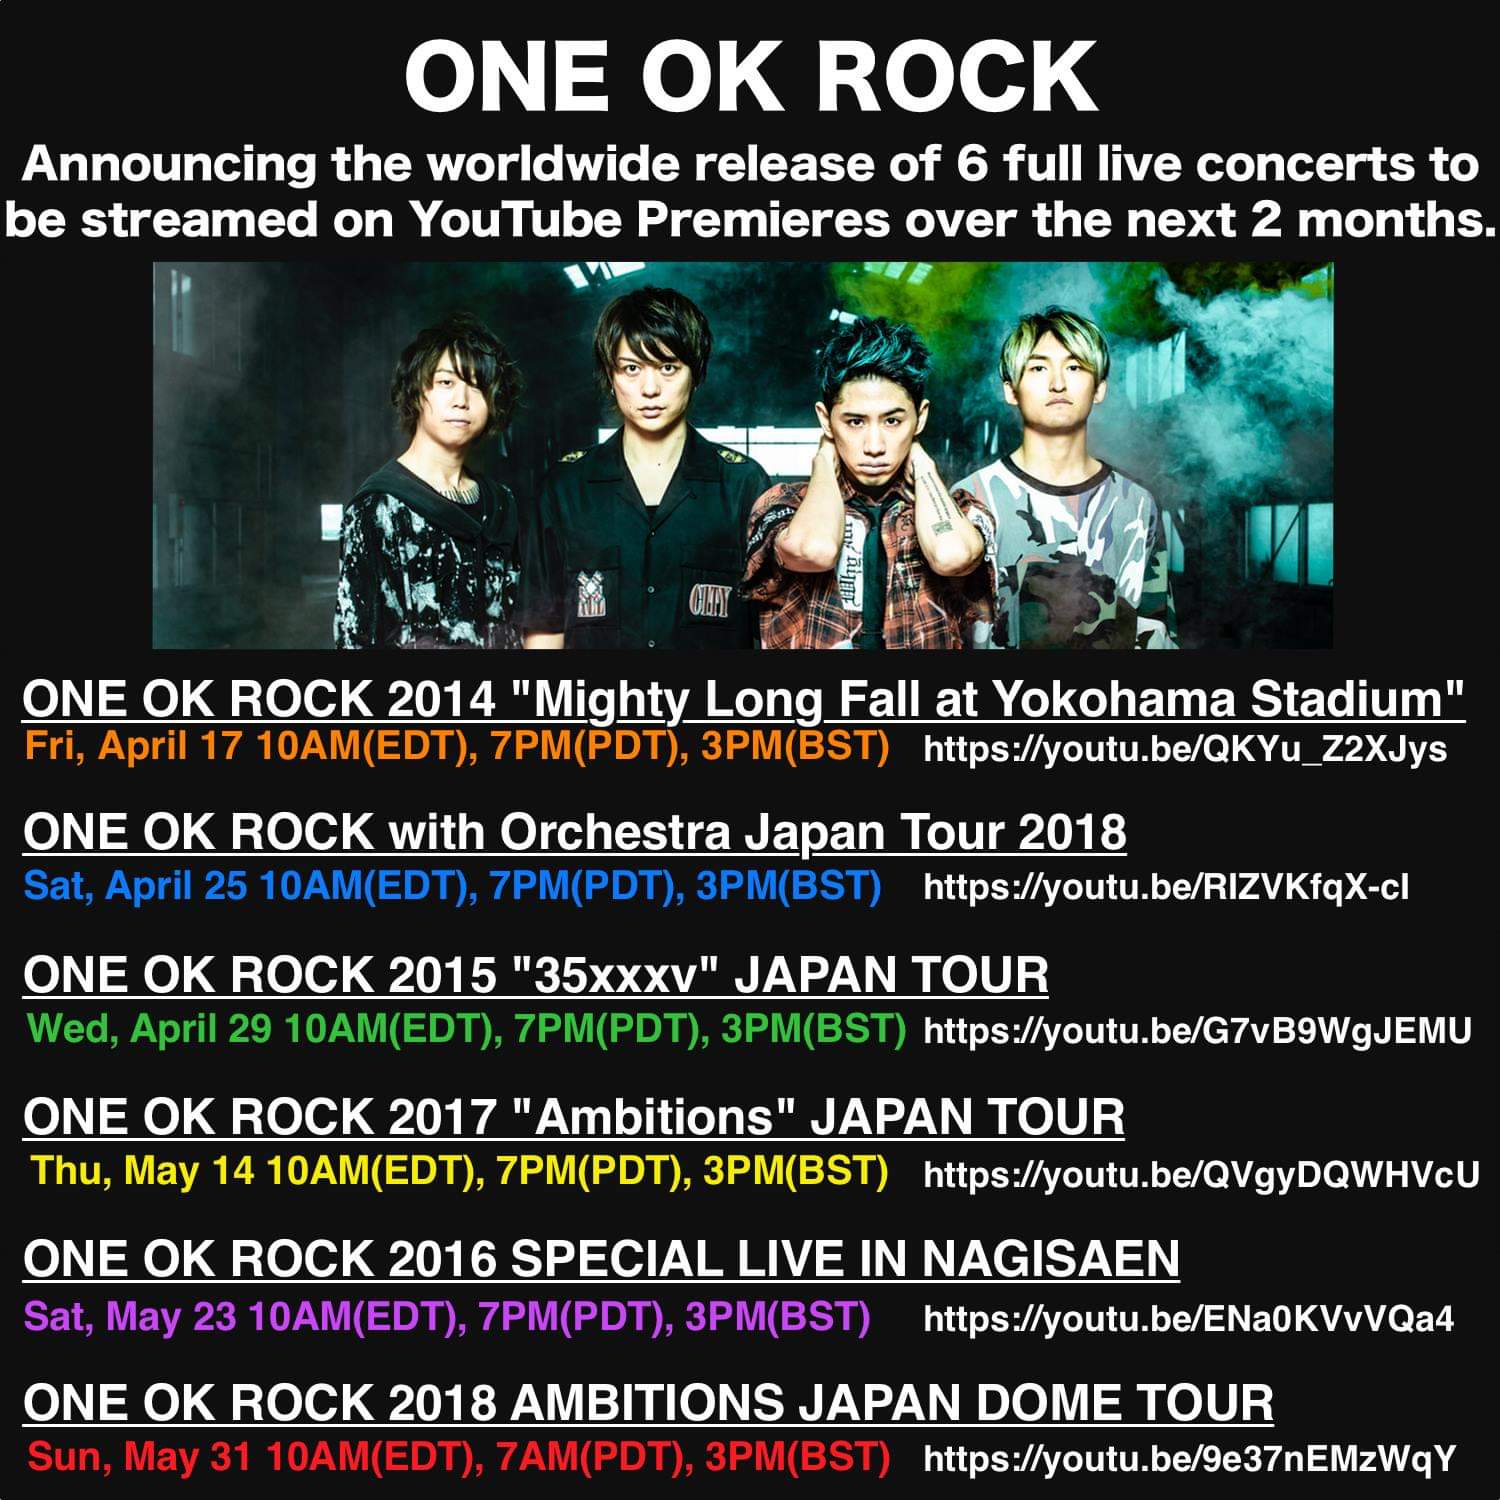 LIVE: ONE OK ROCK 2018 AMBITIONS JAPAN DOME TOUR -YOUTUBE PREMIER